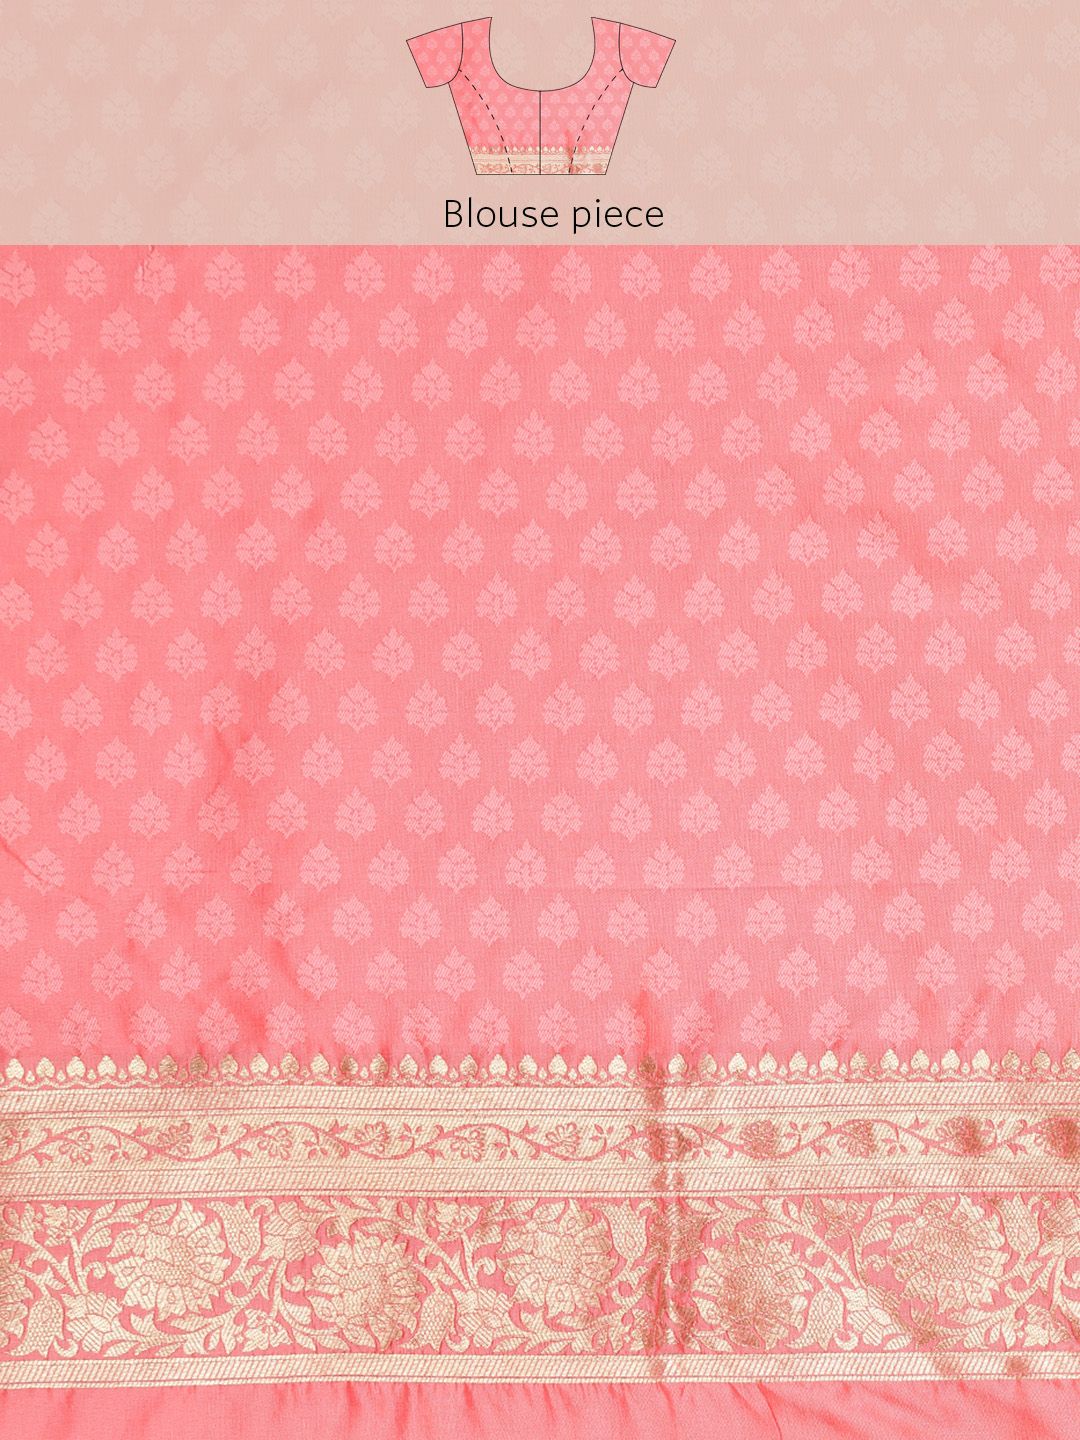 Peach Color Bollywood Banarasi Silk Saree and Silver and Gold Zari Weaving Work - Indian Wedding Collection